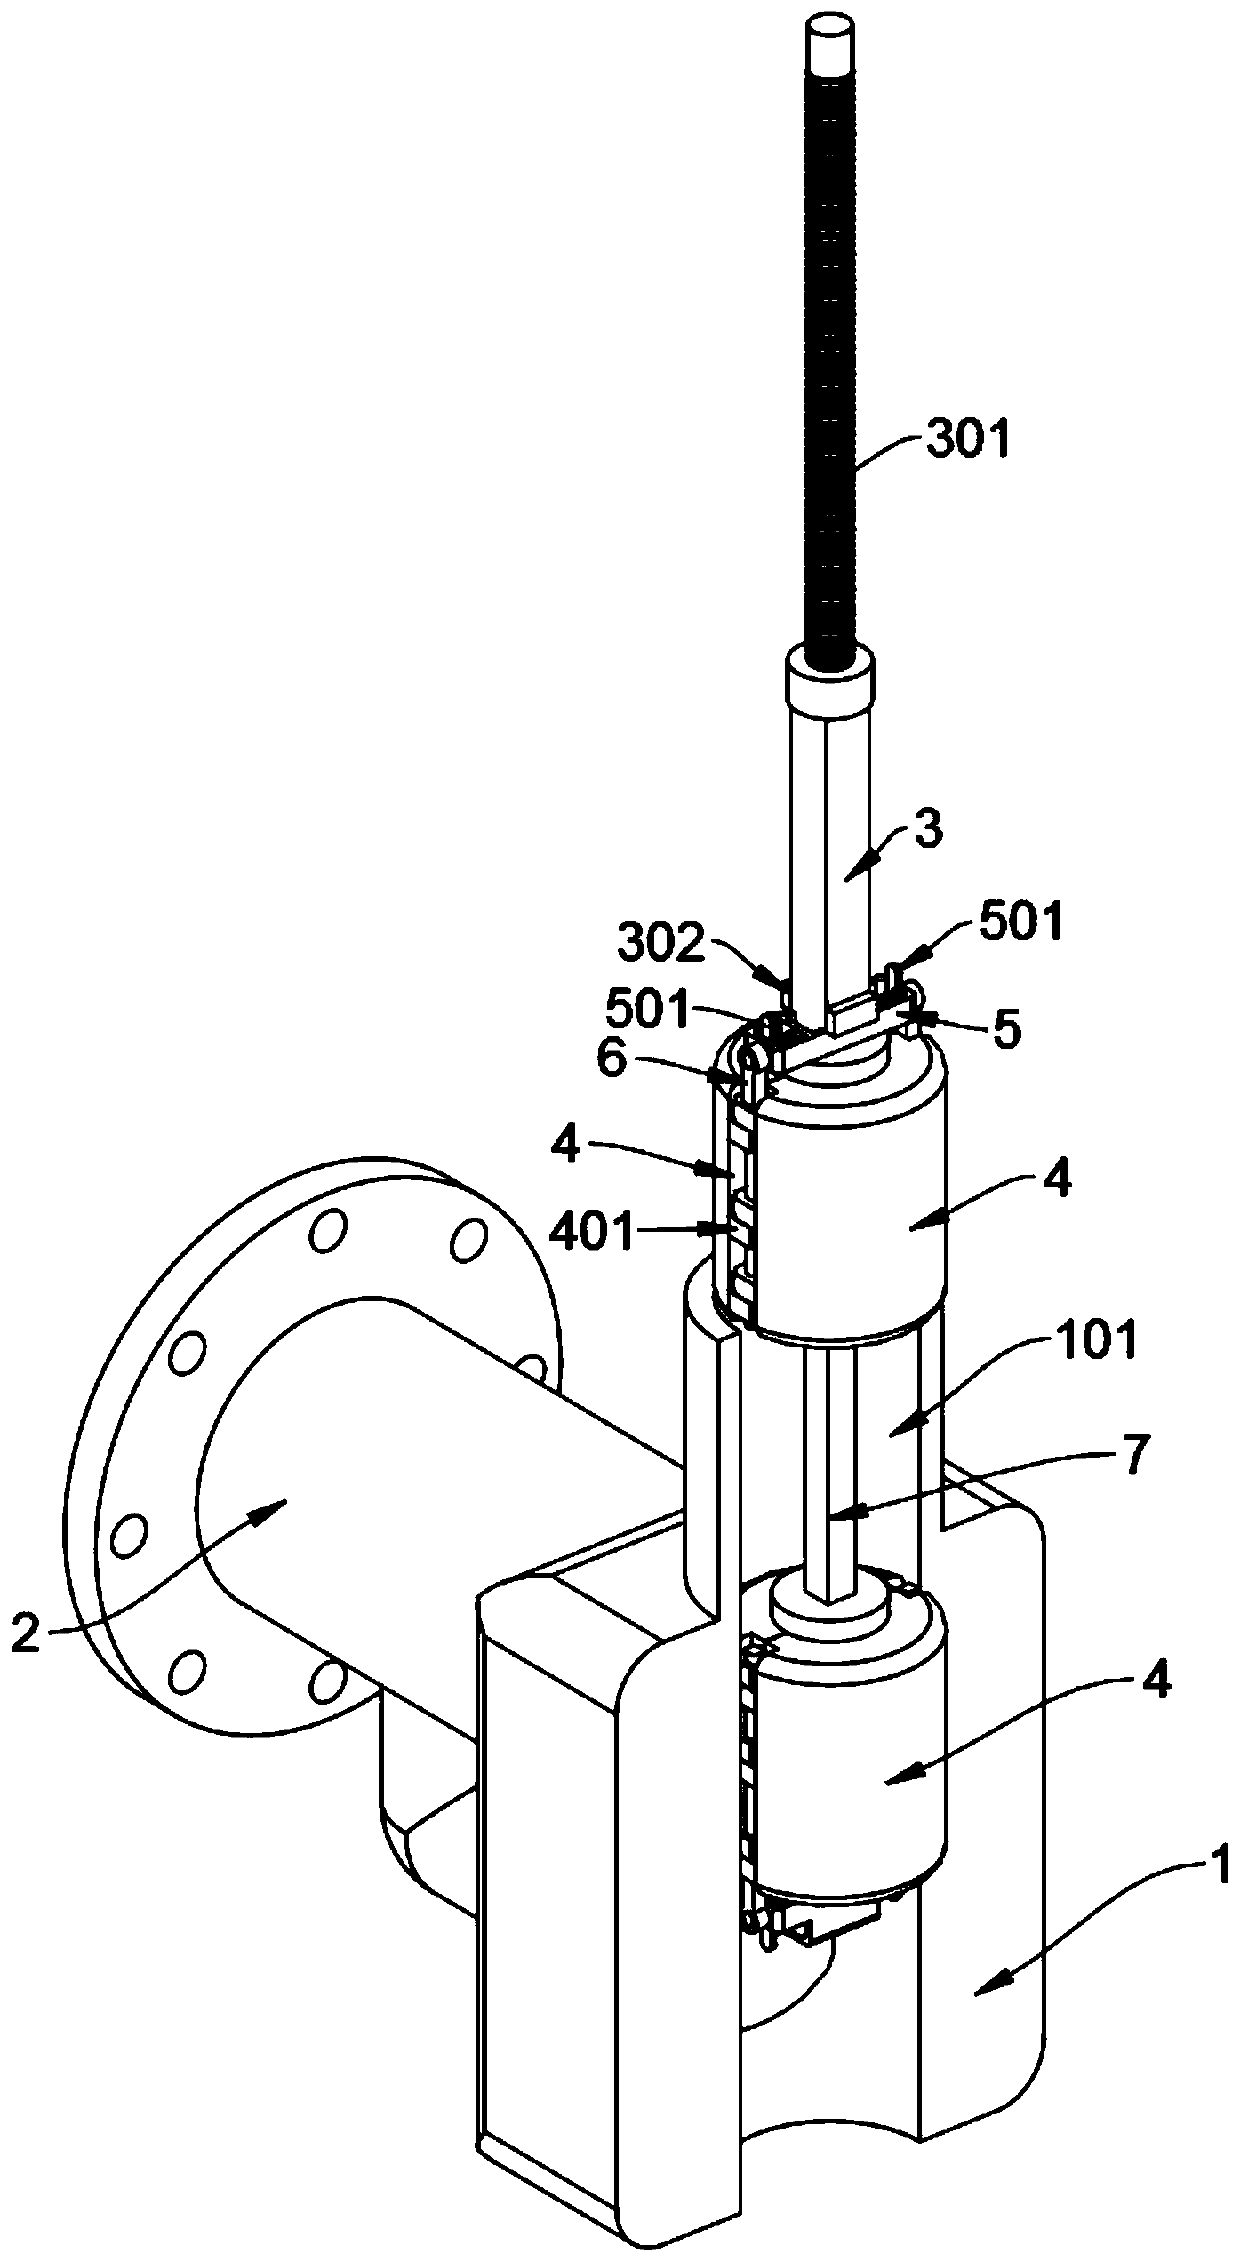 Double-layer intercommunicating water supply valve of ceramic closing element